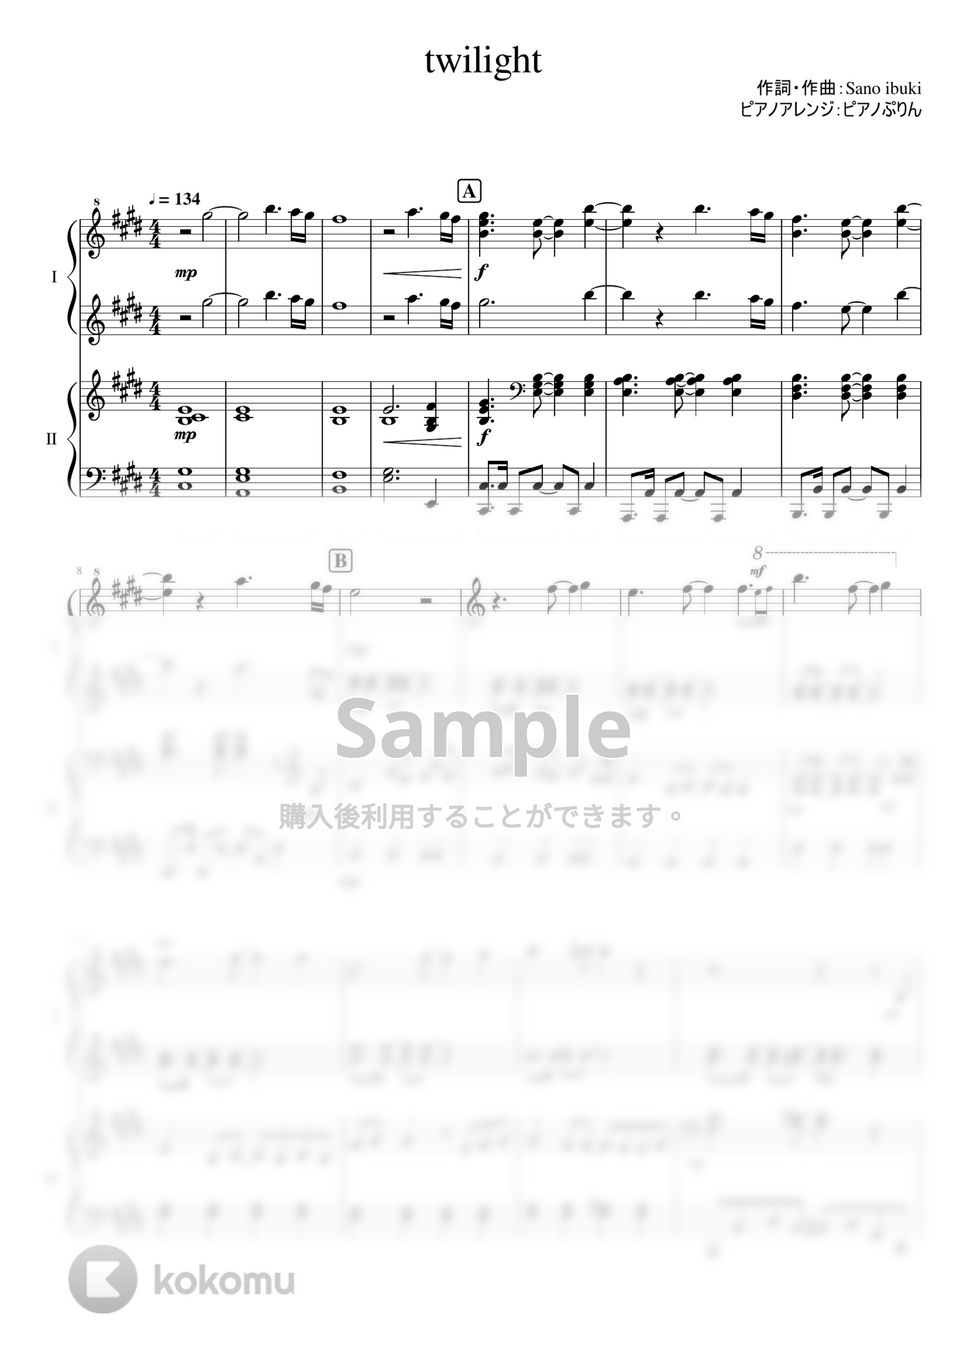 Sano ibuki - twilight (『高良くんと天城くん』オープニング主題歌/ピアノ連弾) by ピアノぷりん